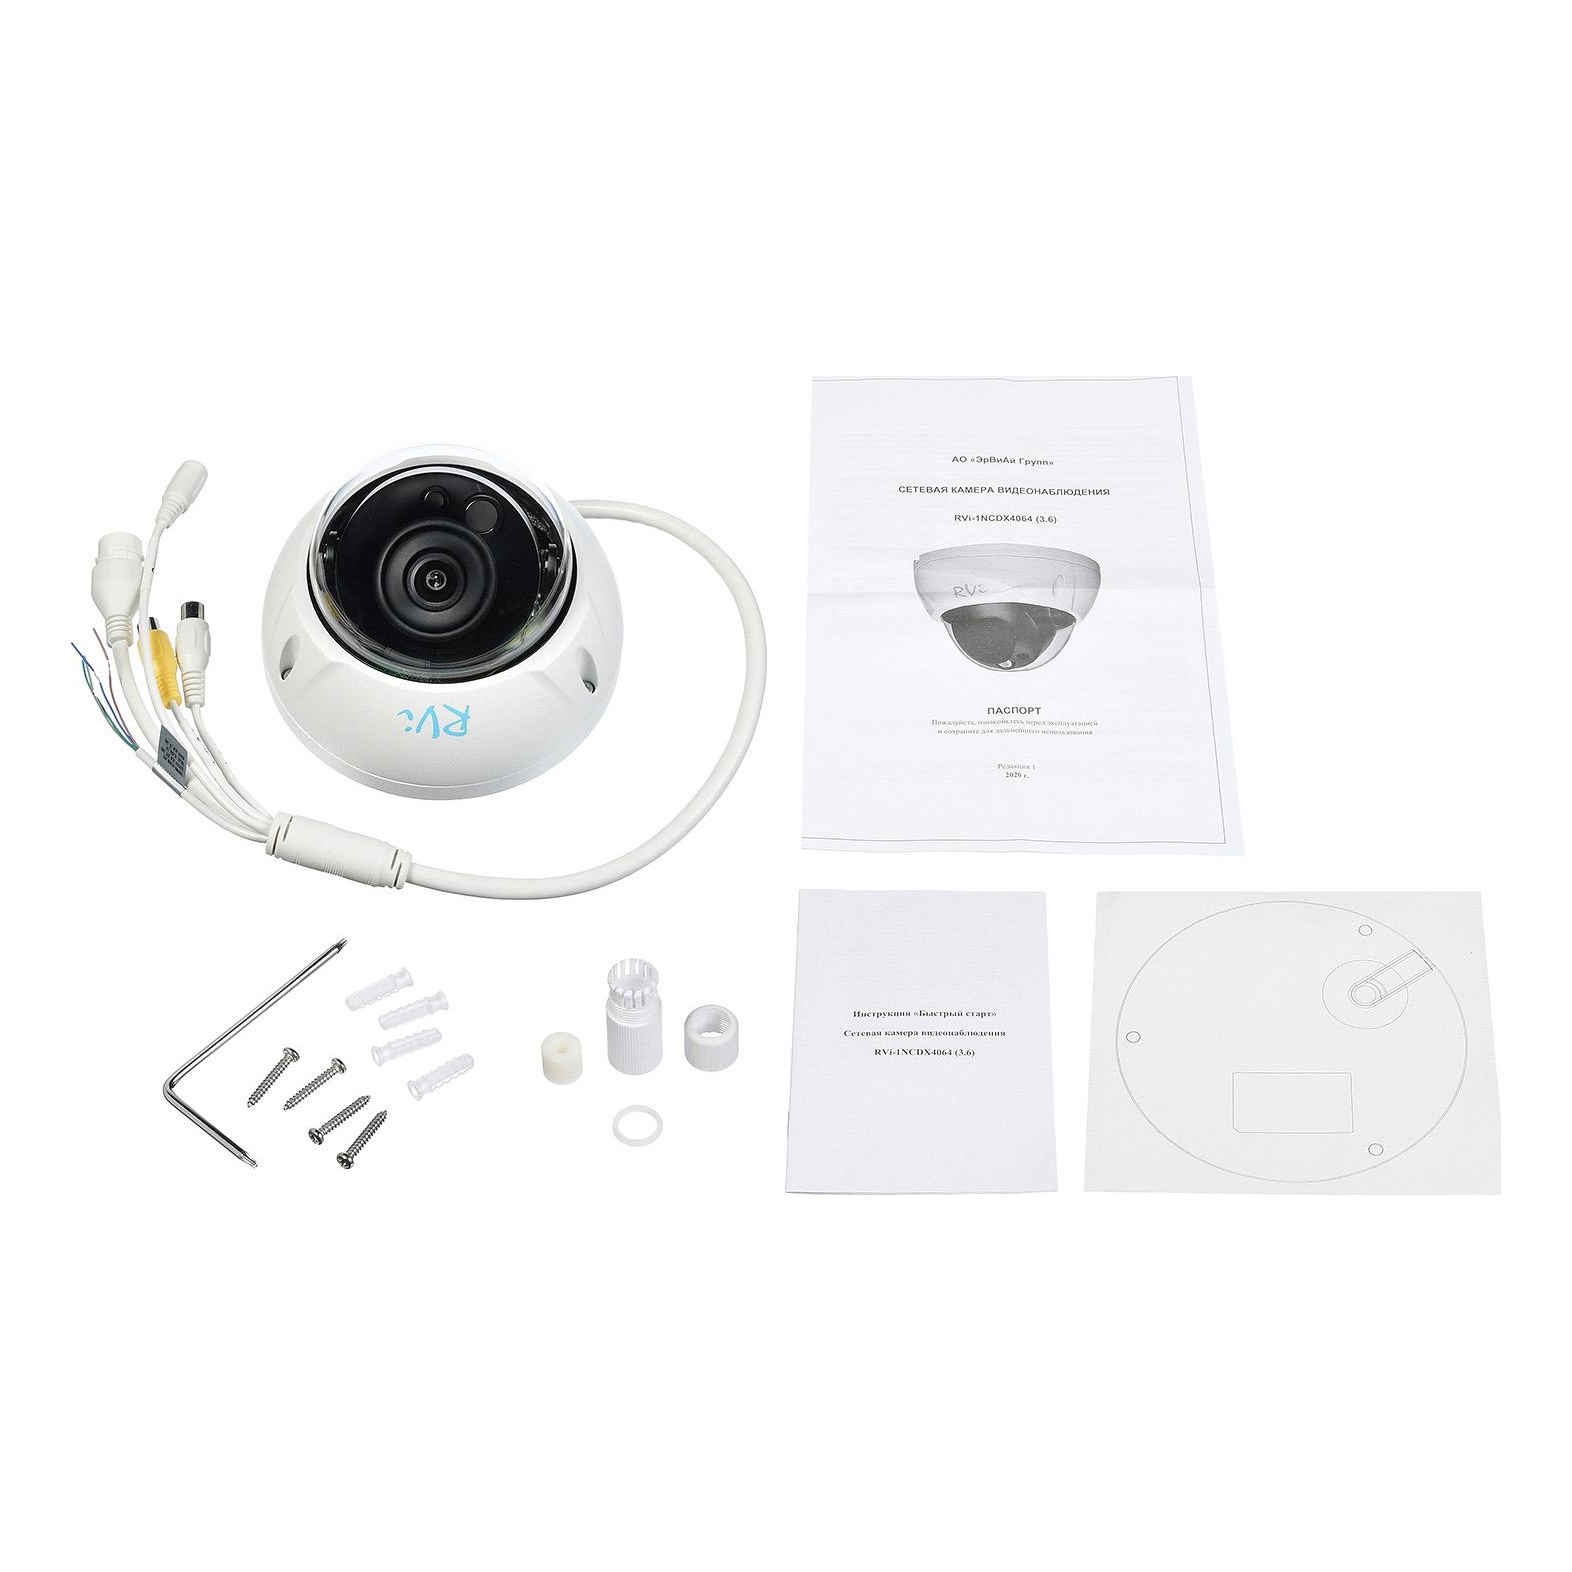 RVi-1NCDX4064 (3.6) white IP видеокамера